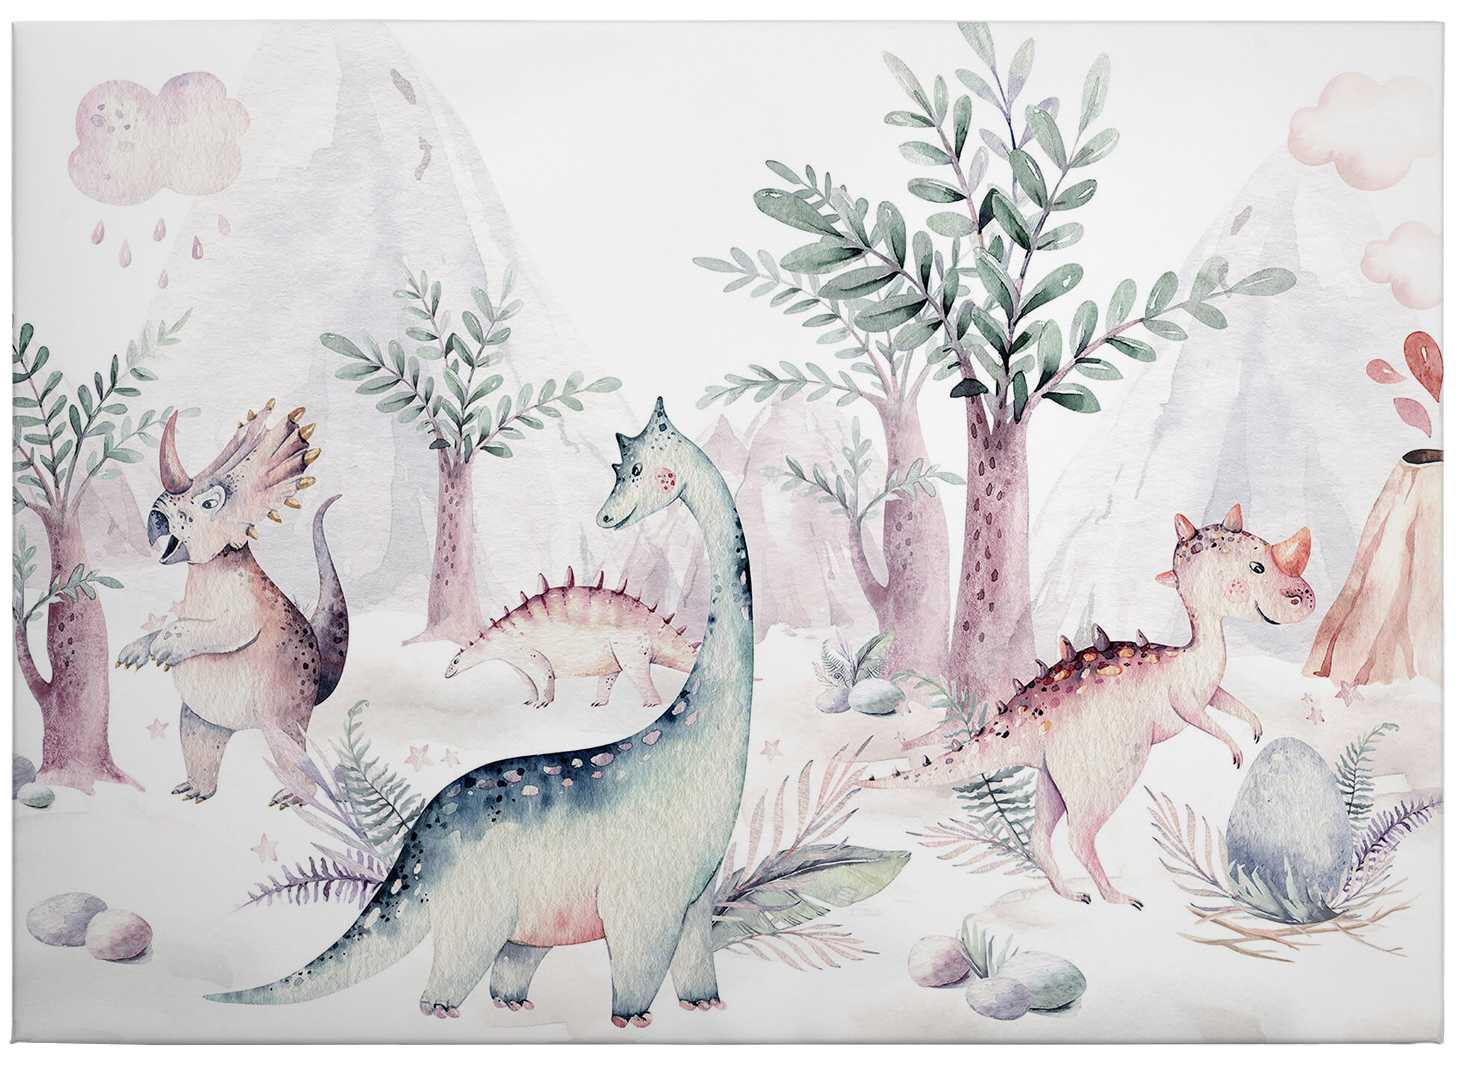             Quadro su tela Dinosauri Bambini Acquerello di Kvilis - 0,70 m x 0,50 m
        